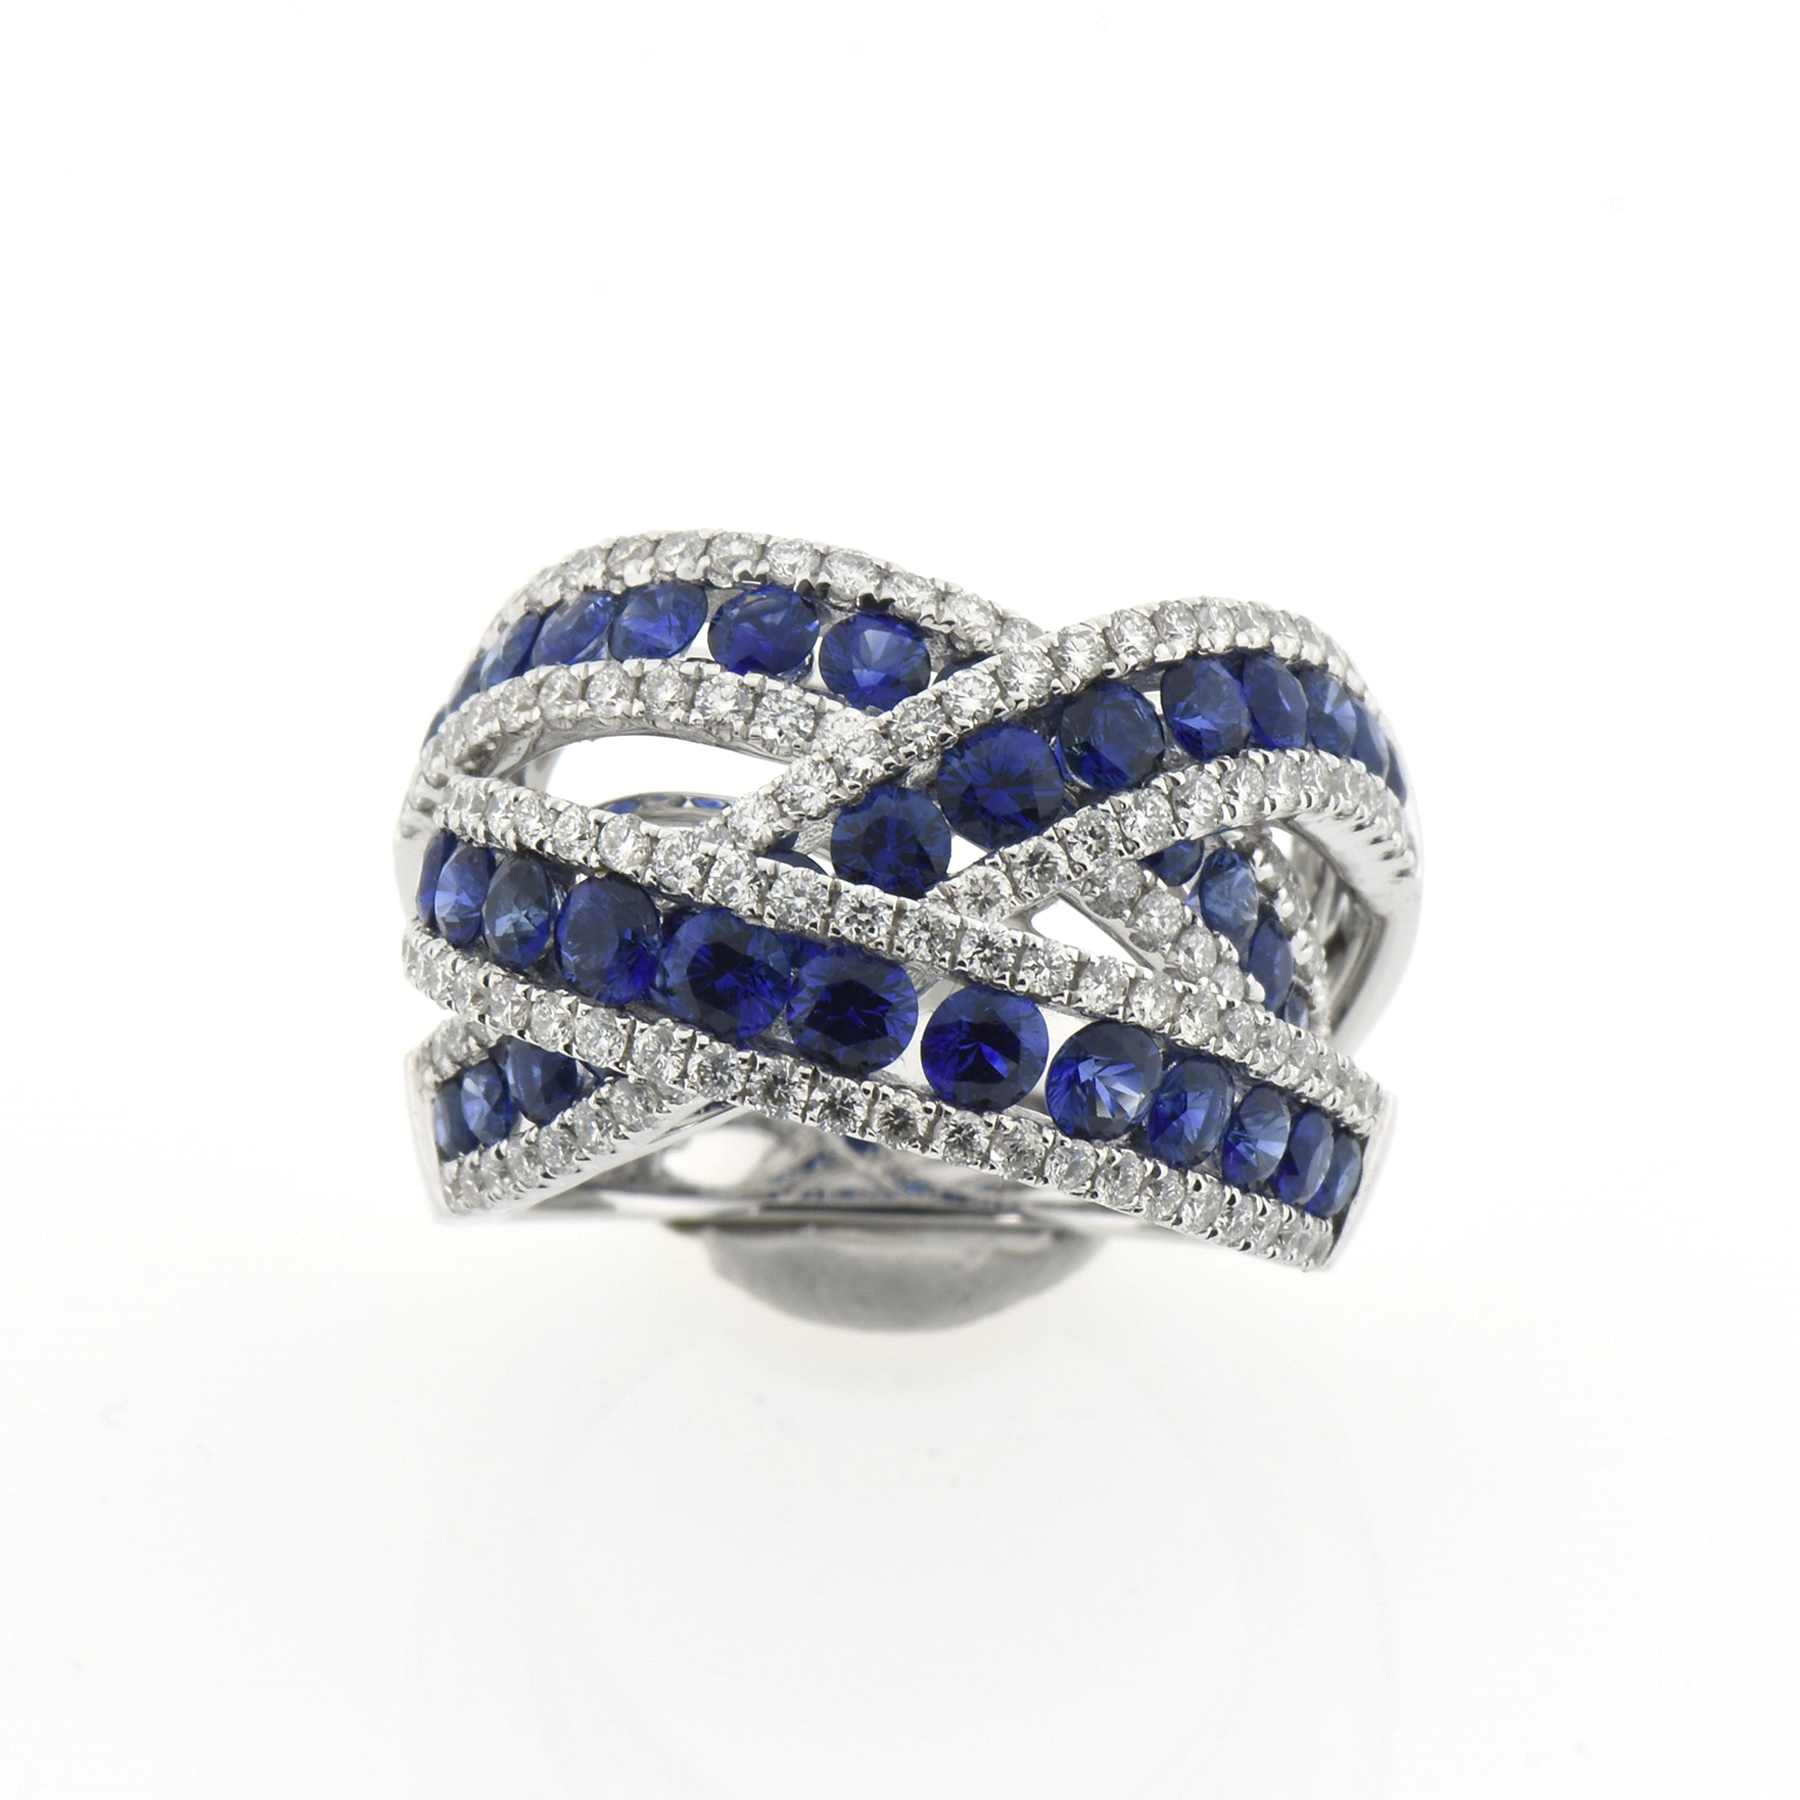 Sapphire Ring Gold 750% Diamonds 1.39 ct Fvvs1 Natural Blue Sapphires 3.19 ct